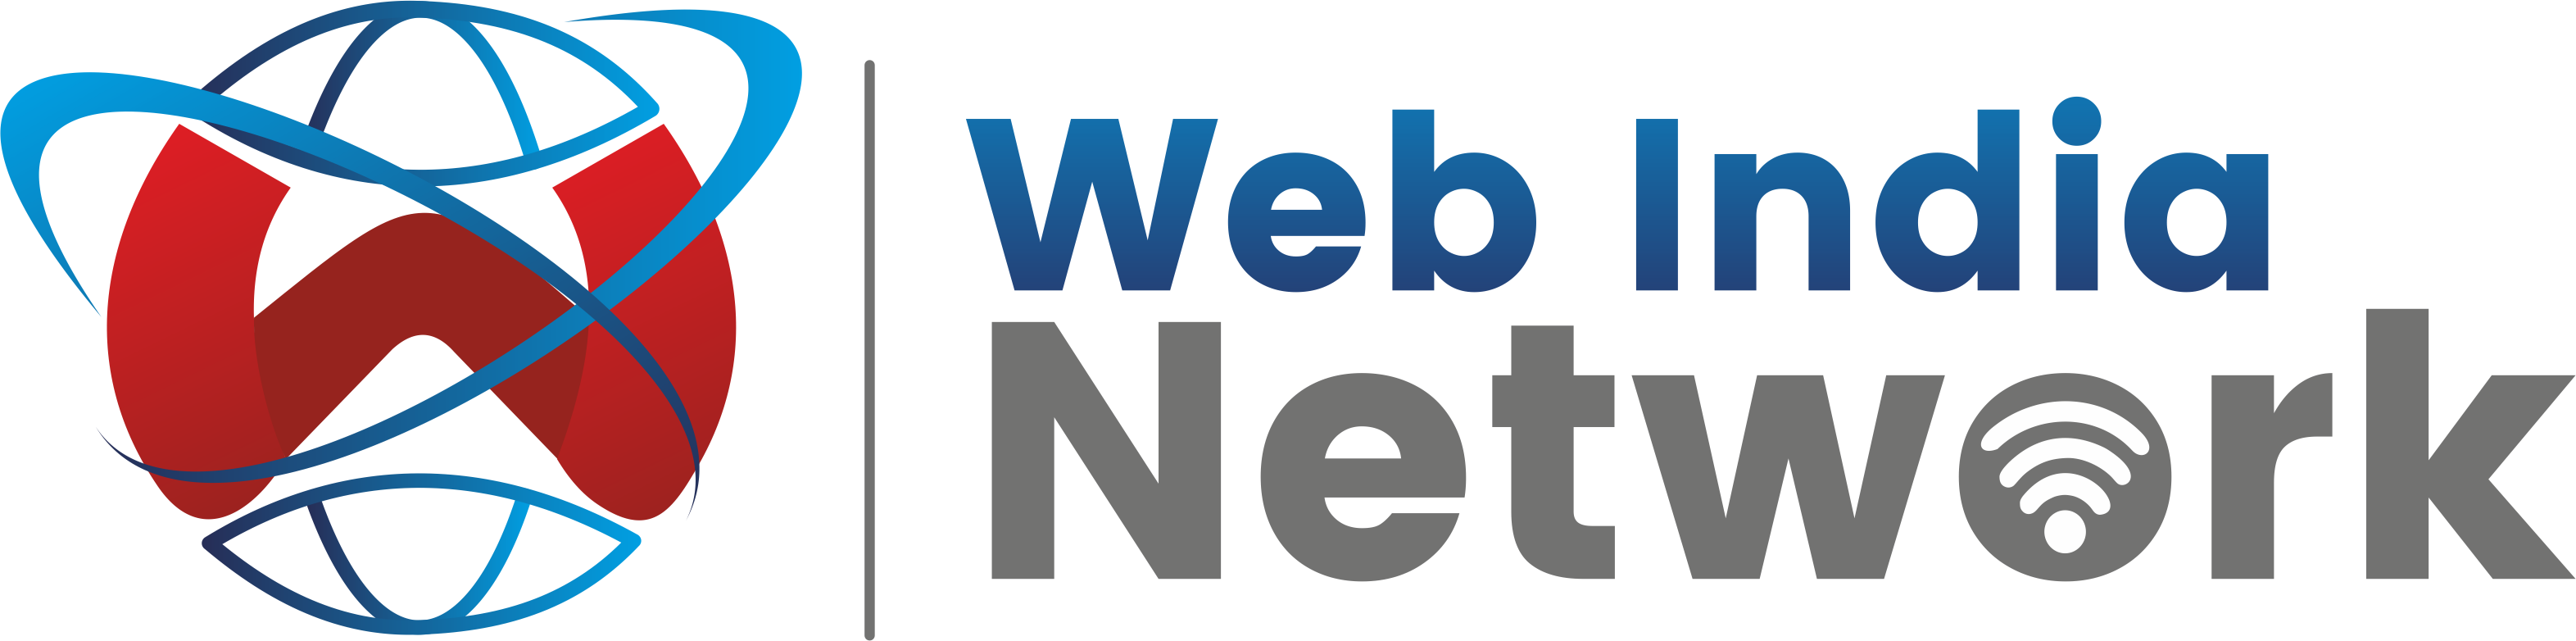 Web India Network